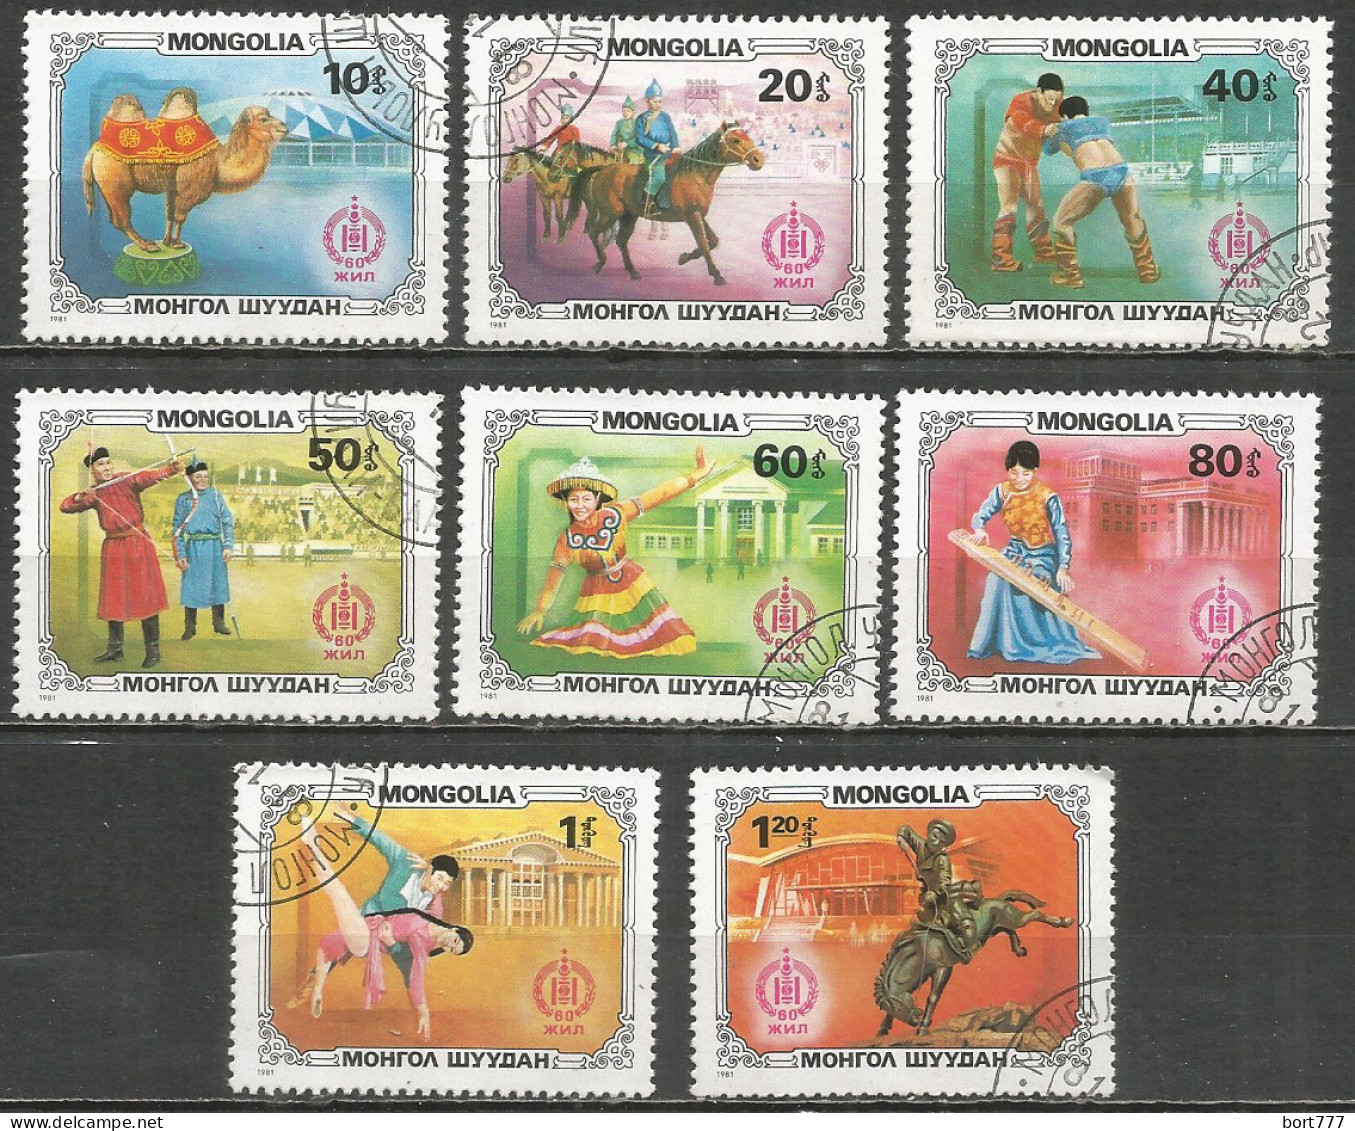 Mongolia 1981 Used Stamps CTO  - Mongolia